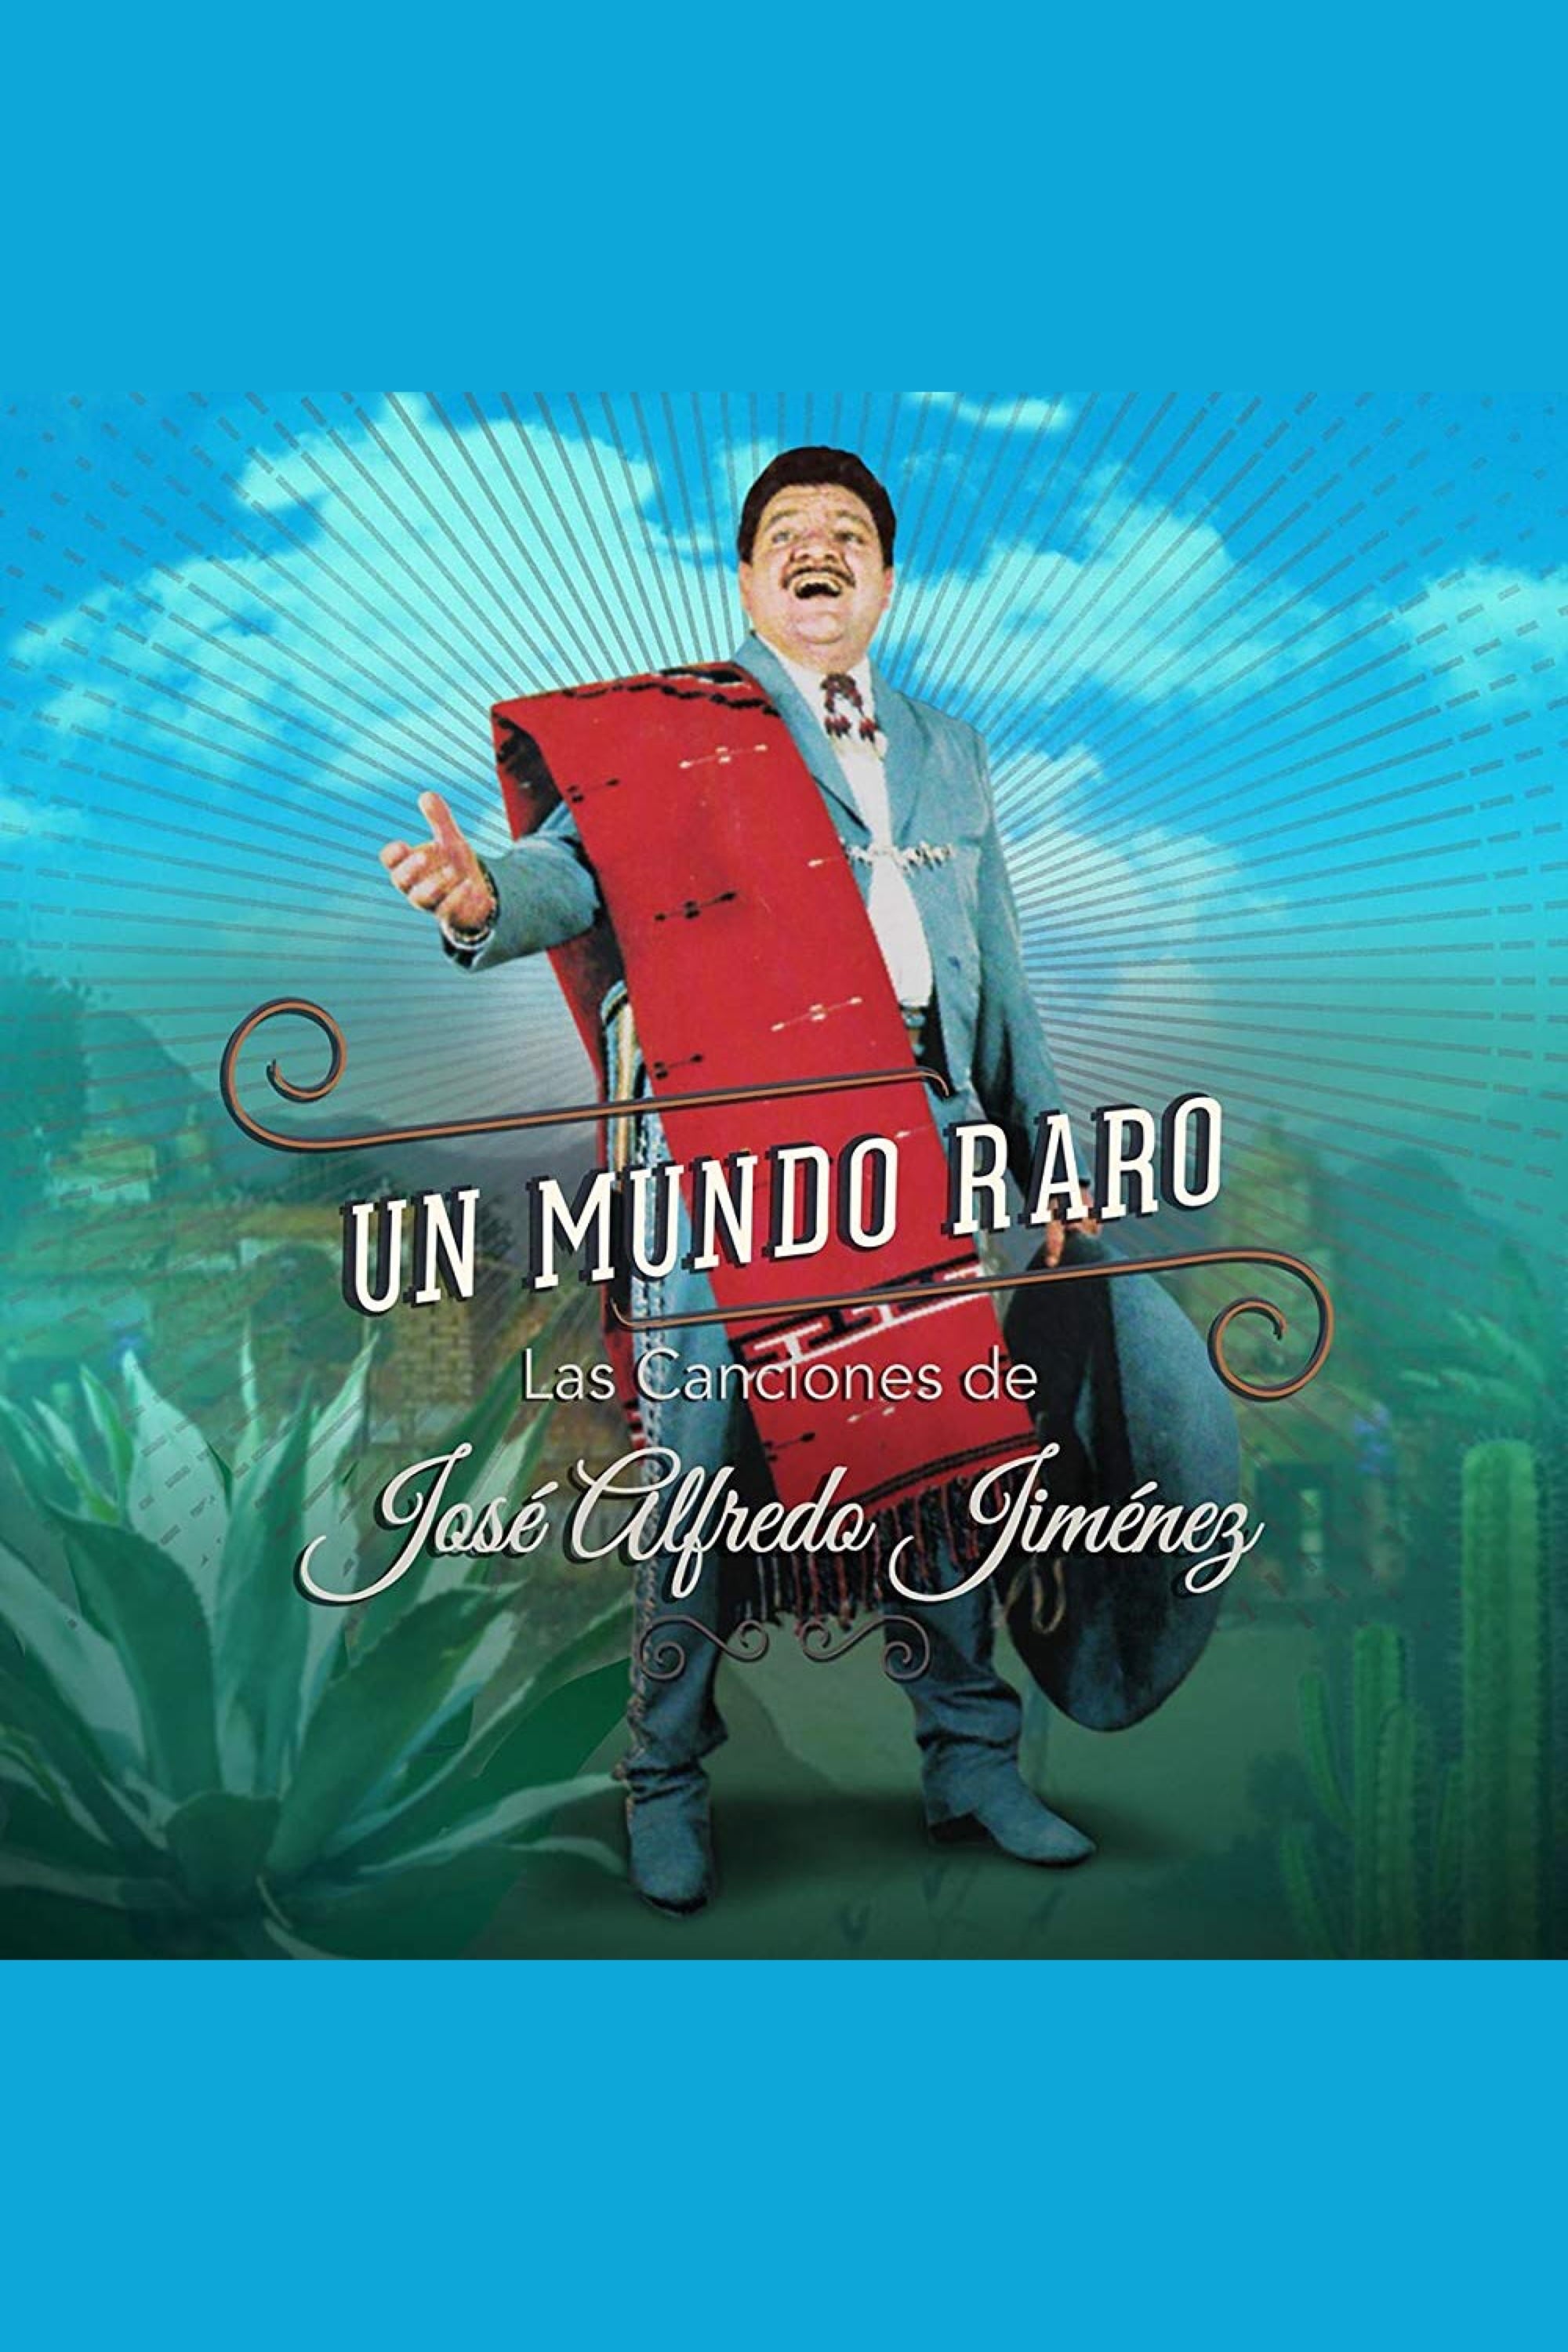 A Strange World: The Songs Of Jose Alfredo Jimenez